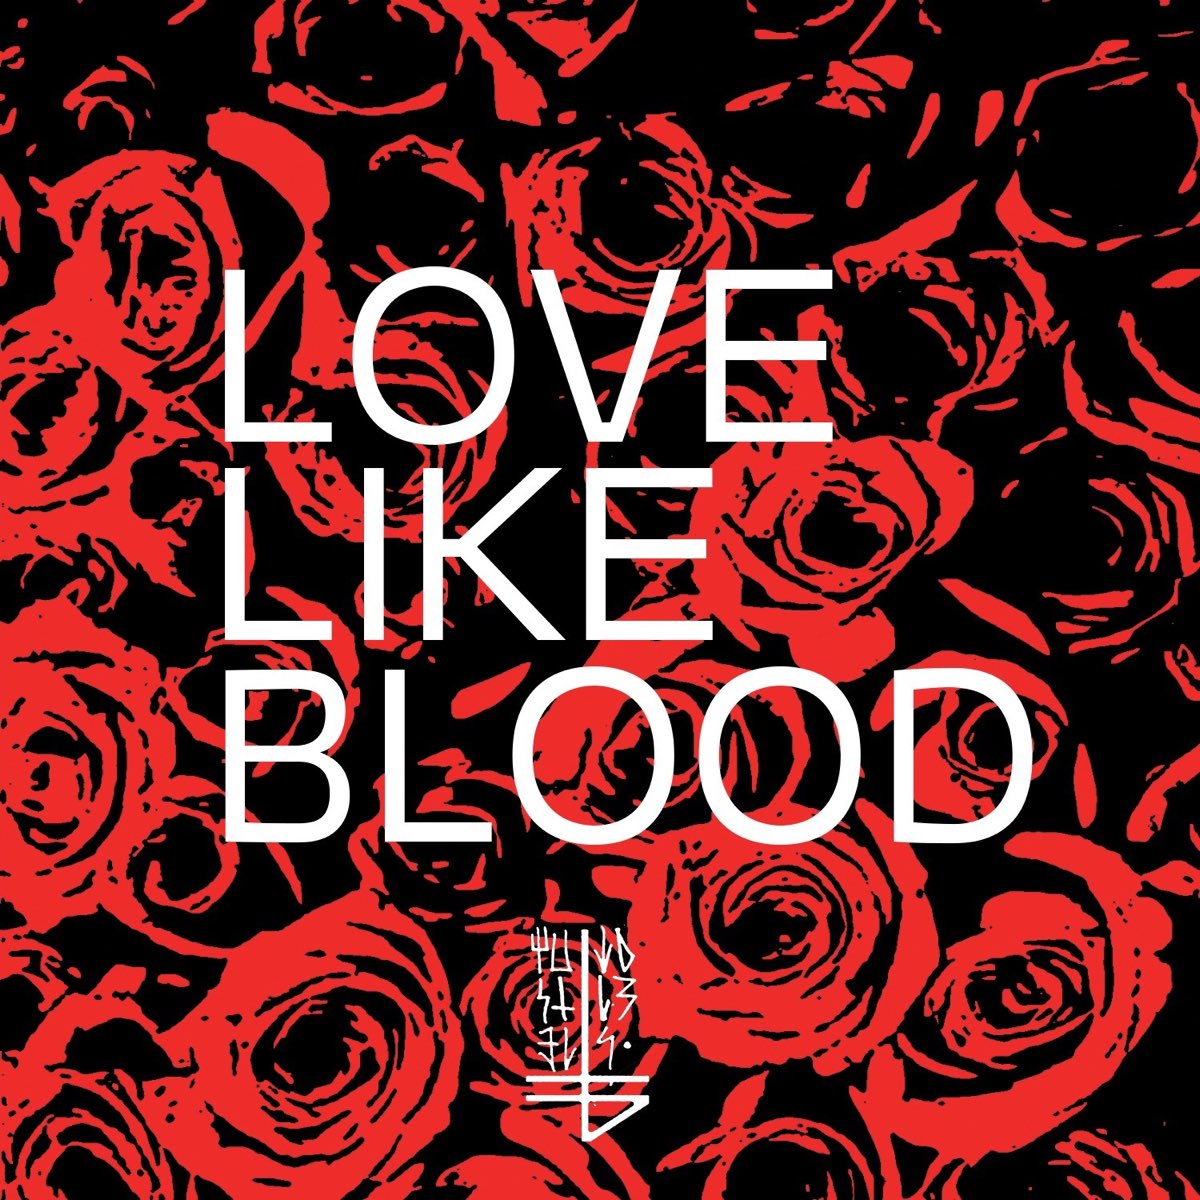 Like Love. Killing joke Love like Blood. Love like Blood Snakekiller.